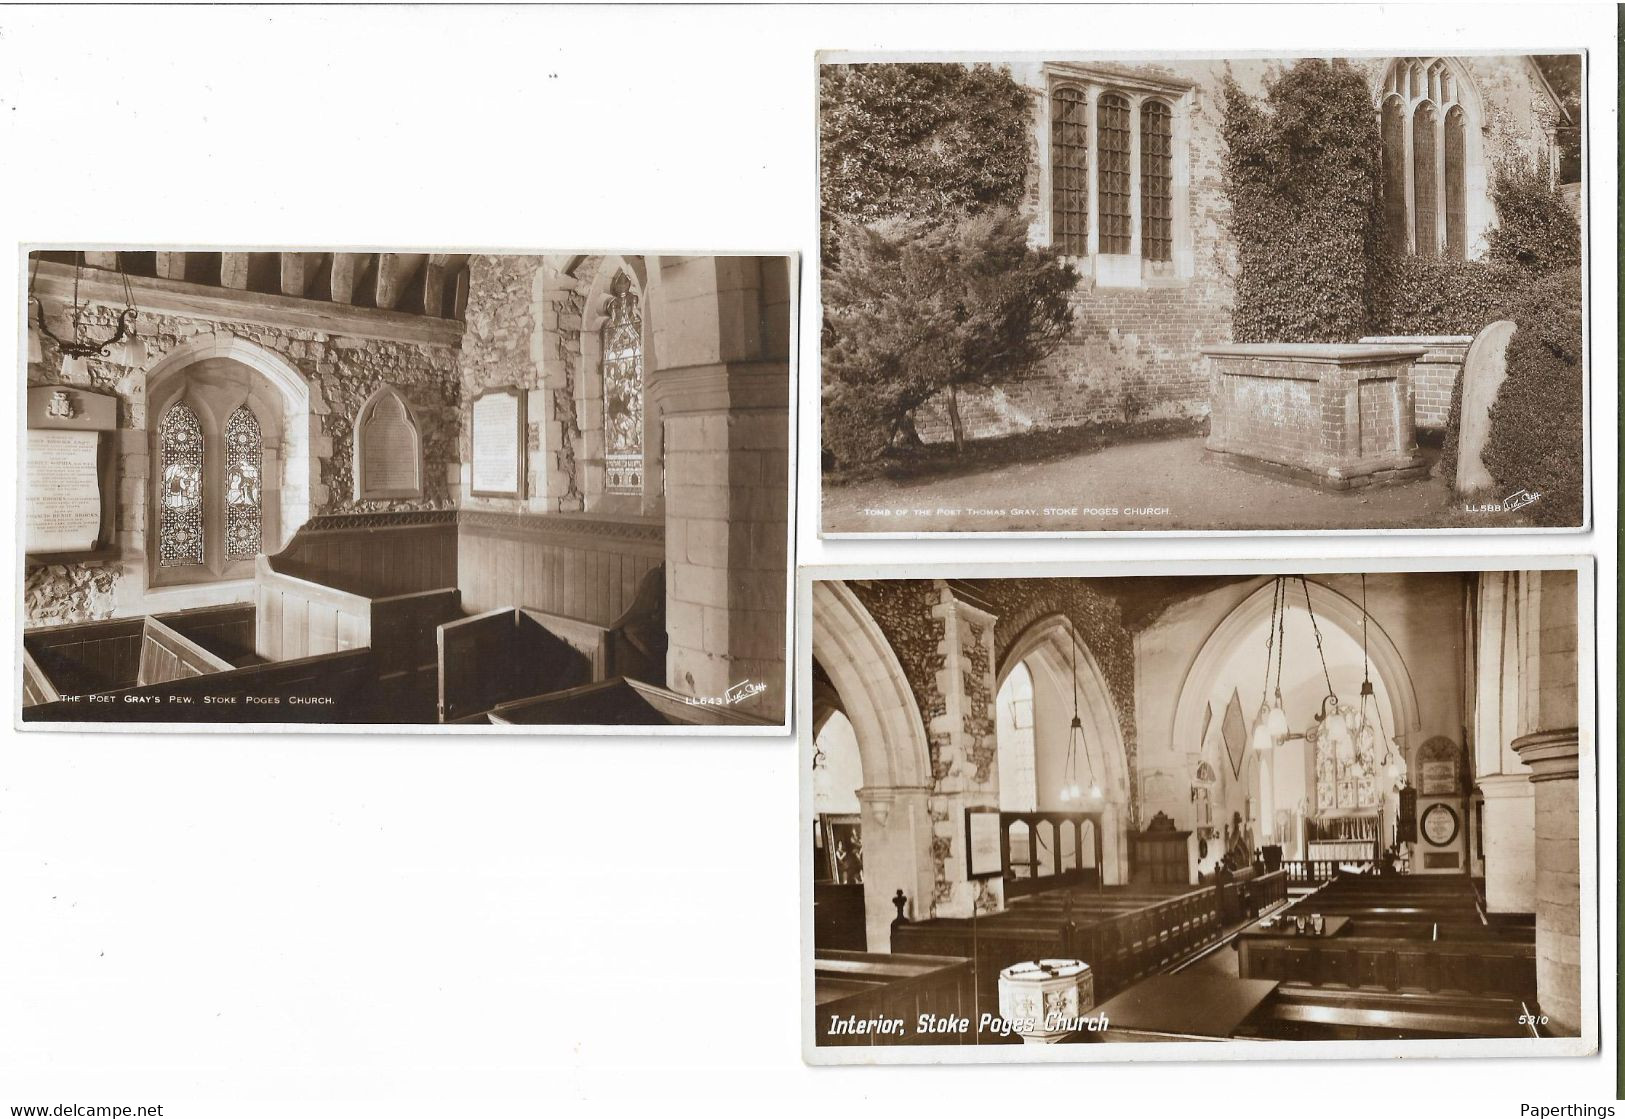 3 Real Photo Postcards, Buckinghamshire, Stoke Poges Village, Church, Tomb And Pew Of Poet Thomas Gray. - Buckinghamshire